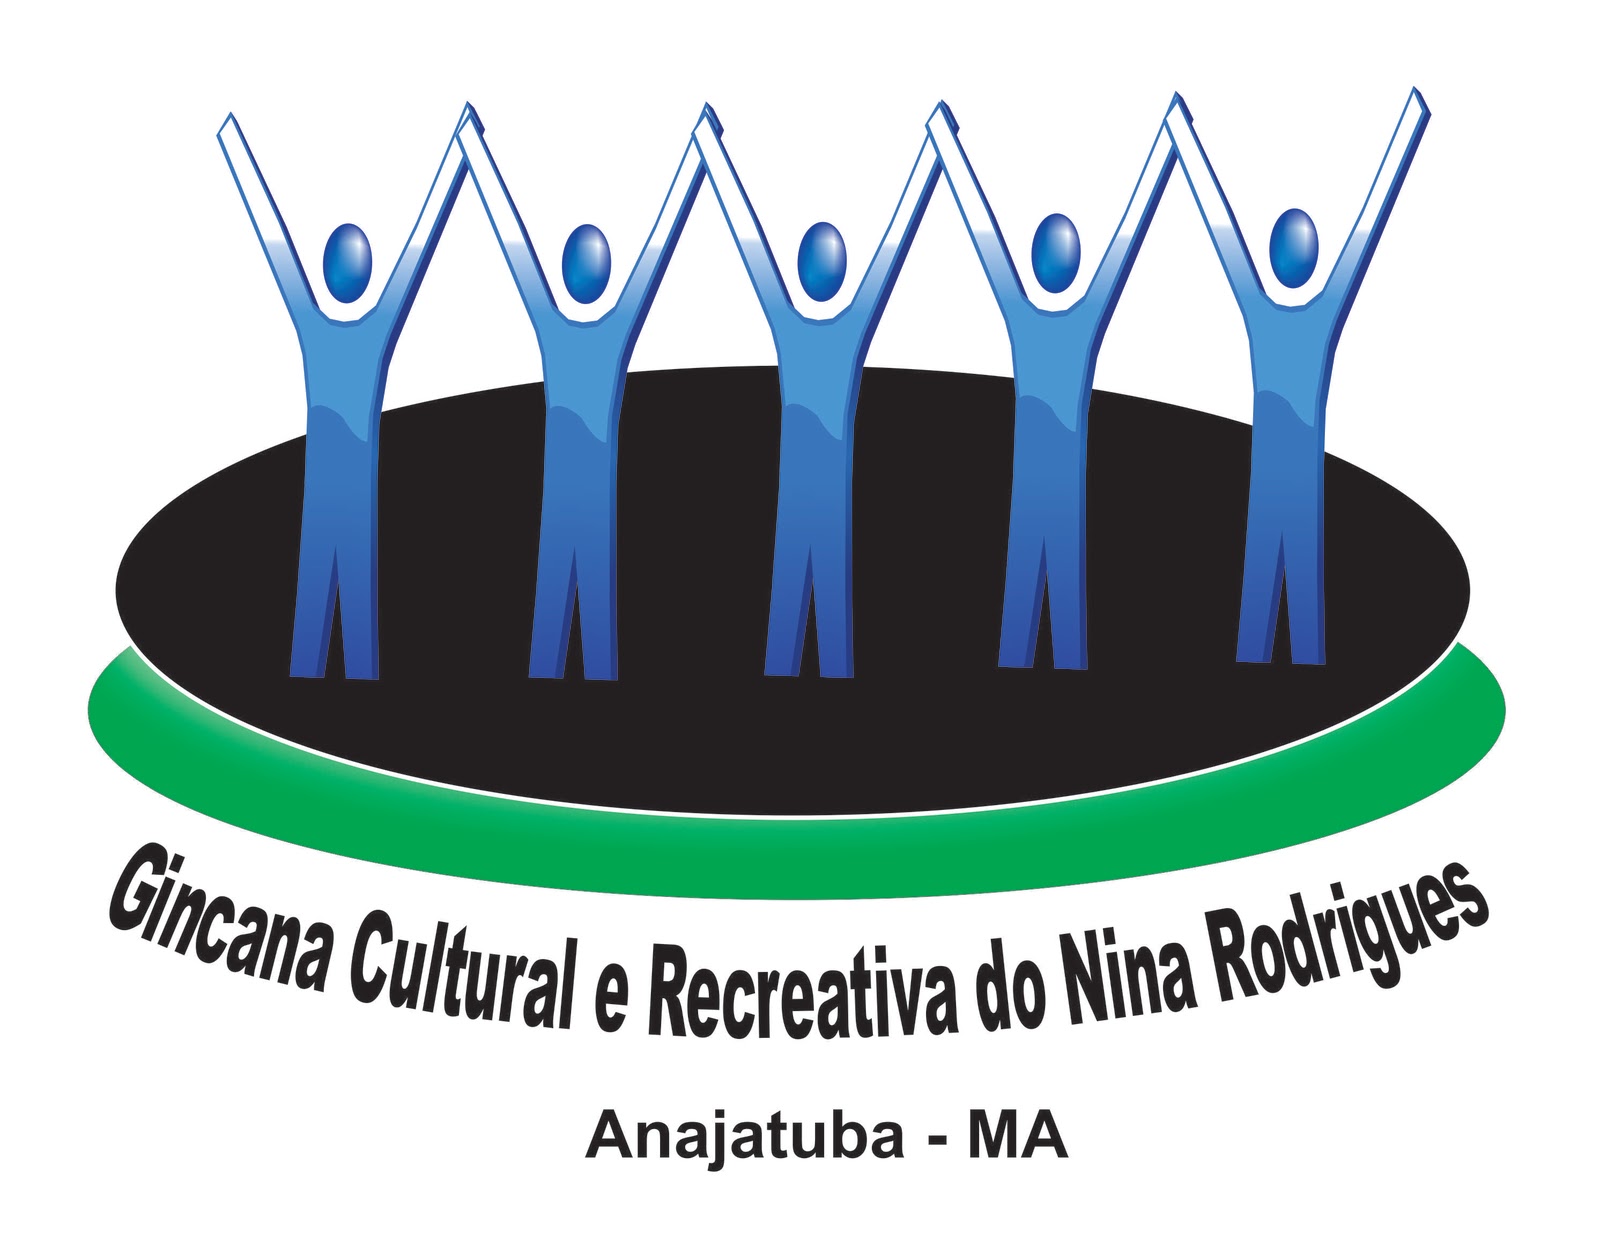 Gincana Cultural e Recreativa do Nina Rdrigues será no dia 10 de Dezembro